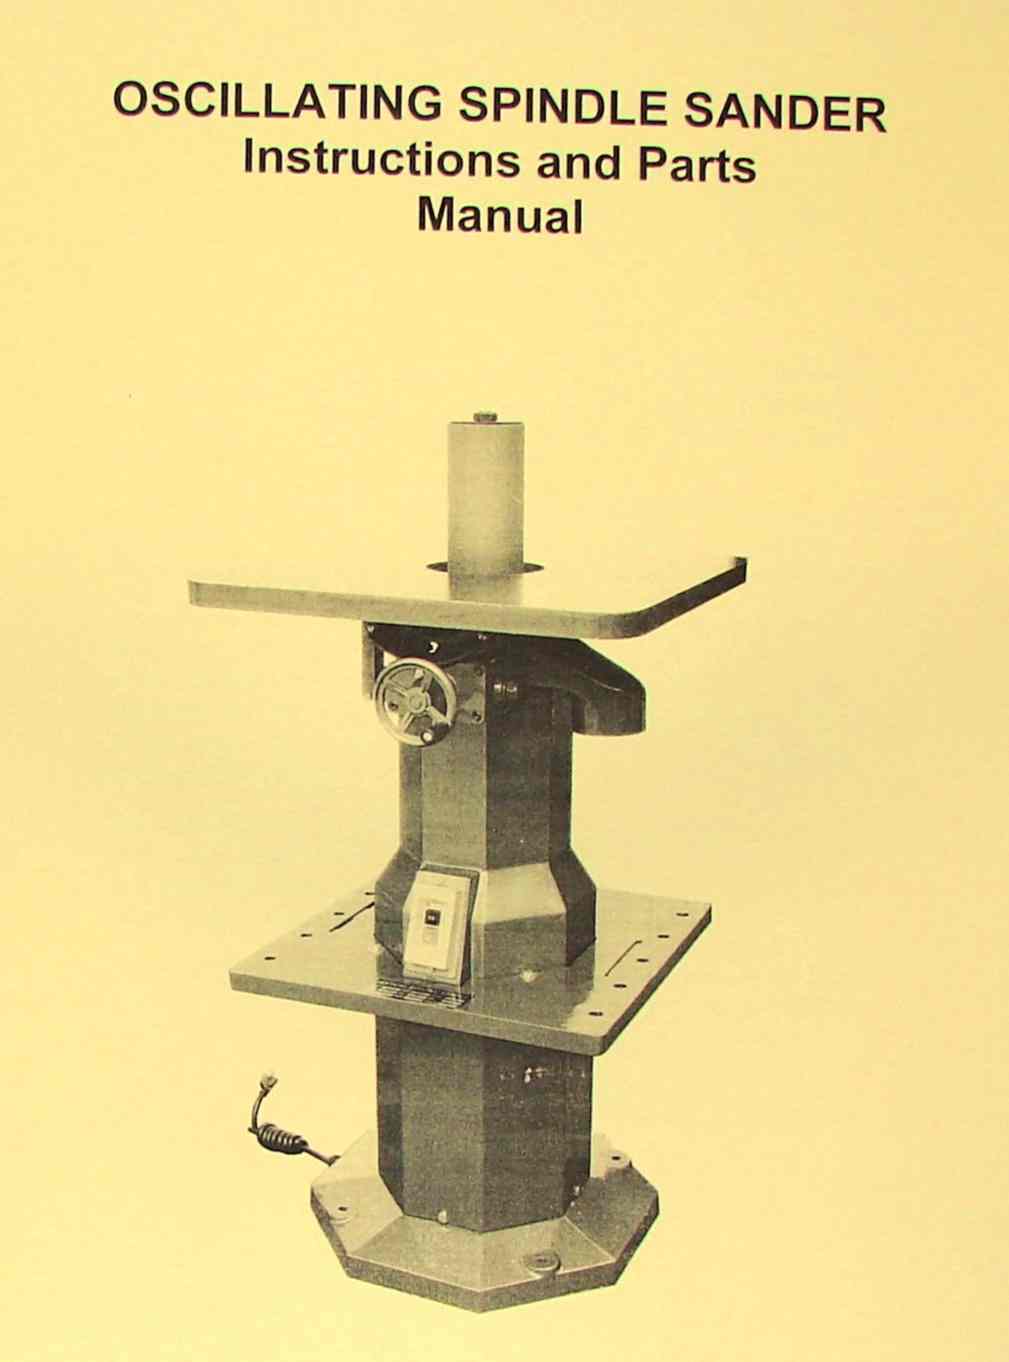 JET/Asian OVS-10 Oscillating Spindle Sander Operator's & Parts Manual 0397 